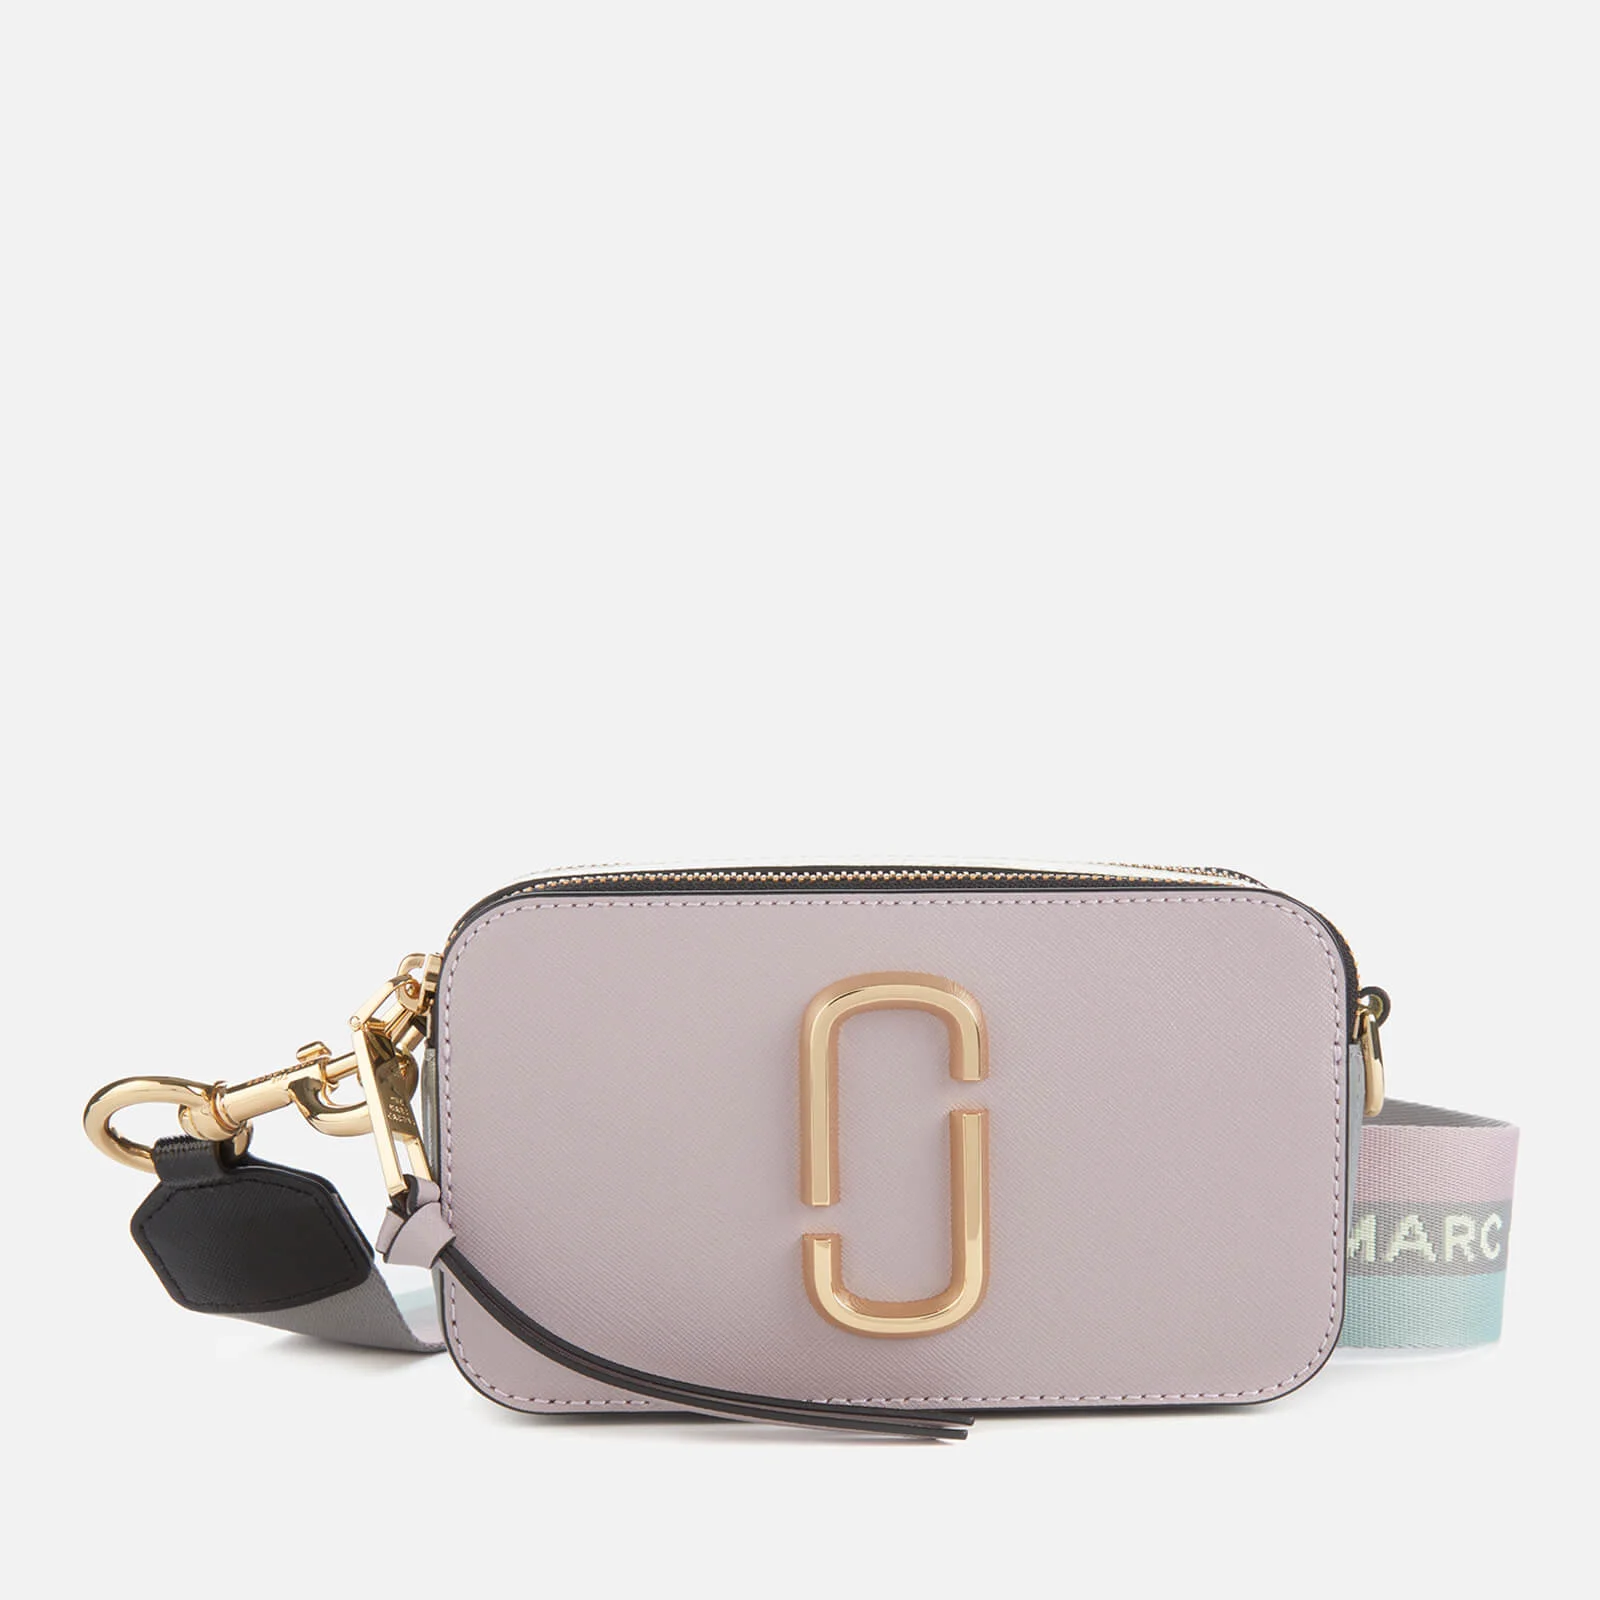 Marc Jacobs Women's Snapshot Cross Body Bag - Dusty Lilac Multi Image 1